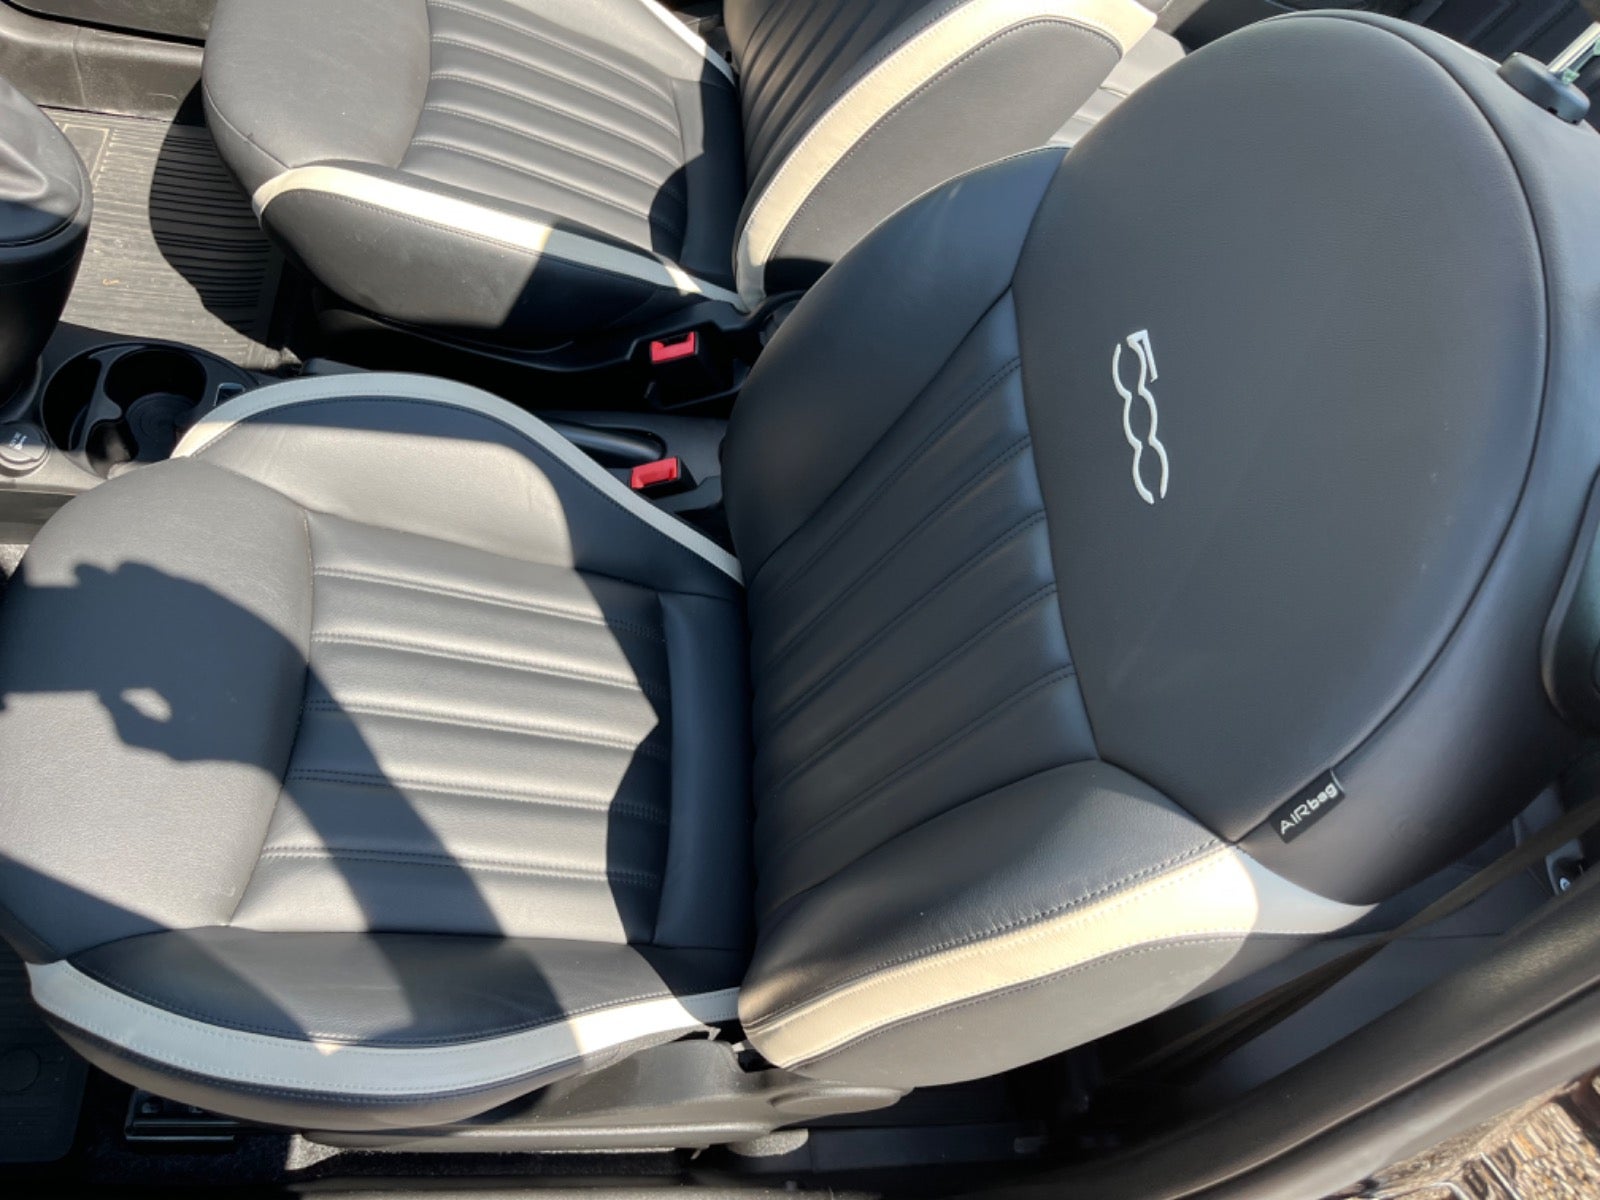 Fiat 500C 1,2 Lounge Benzin modelår 2018 km 36000 Sort ABS